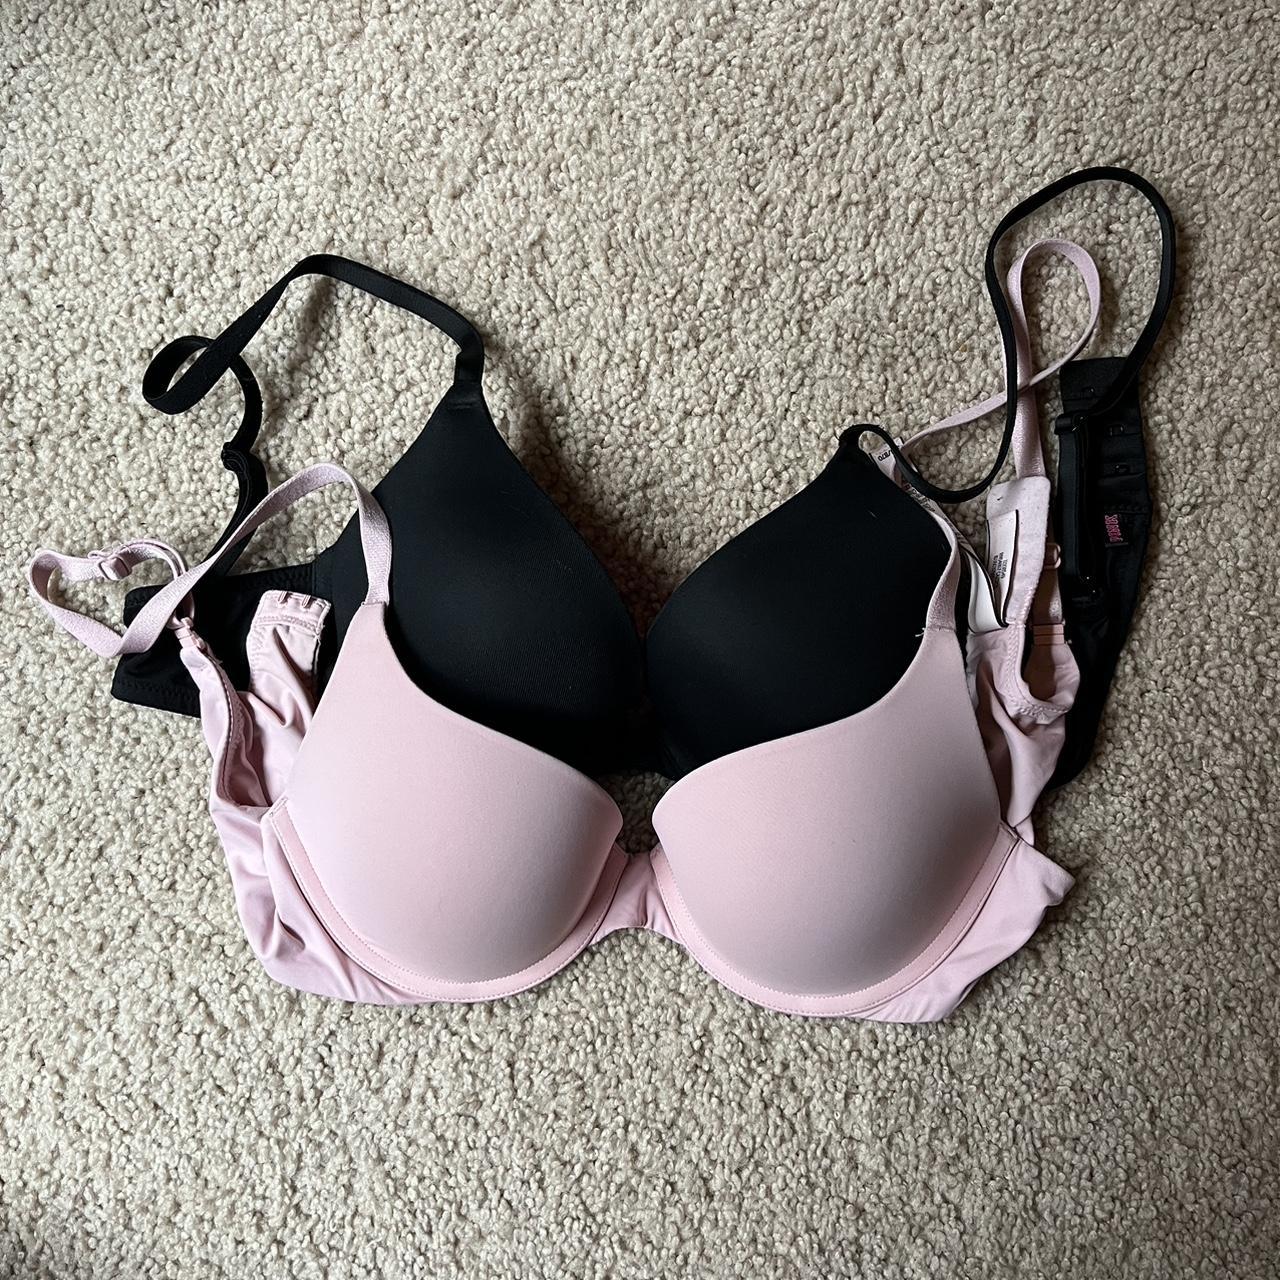 Victorias Secret Pink wear everywhere push up bra. - Depop